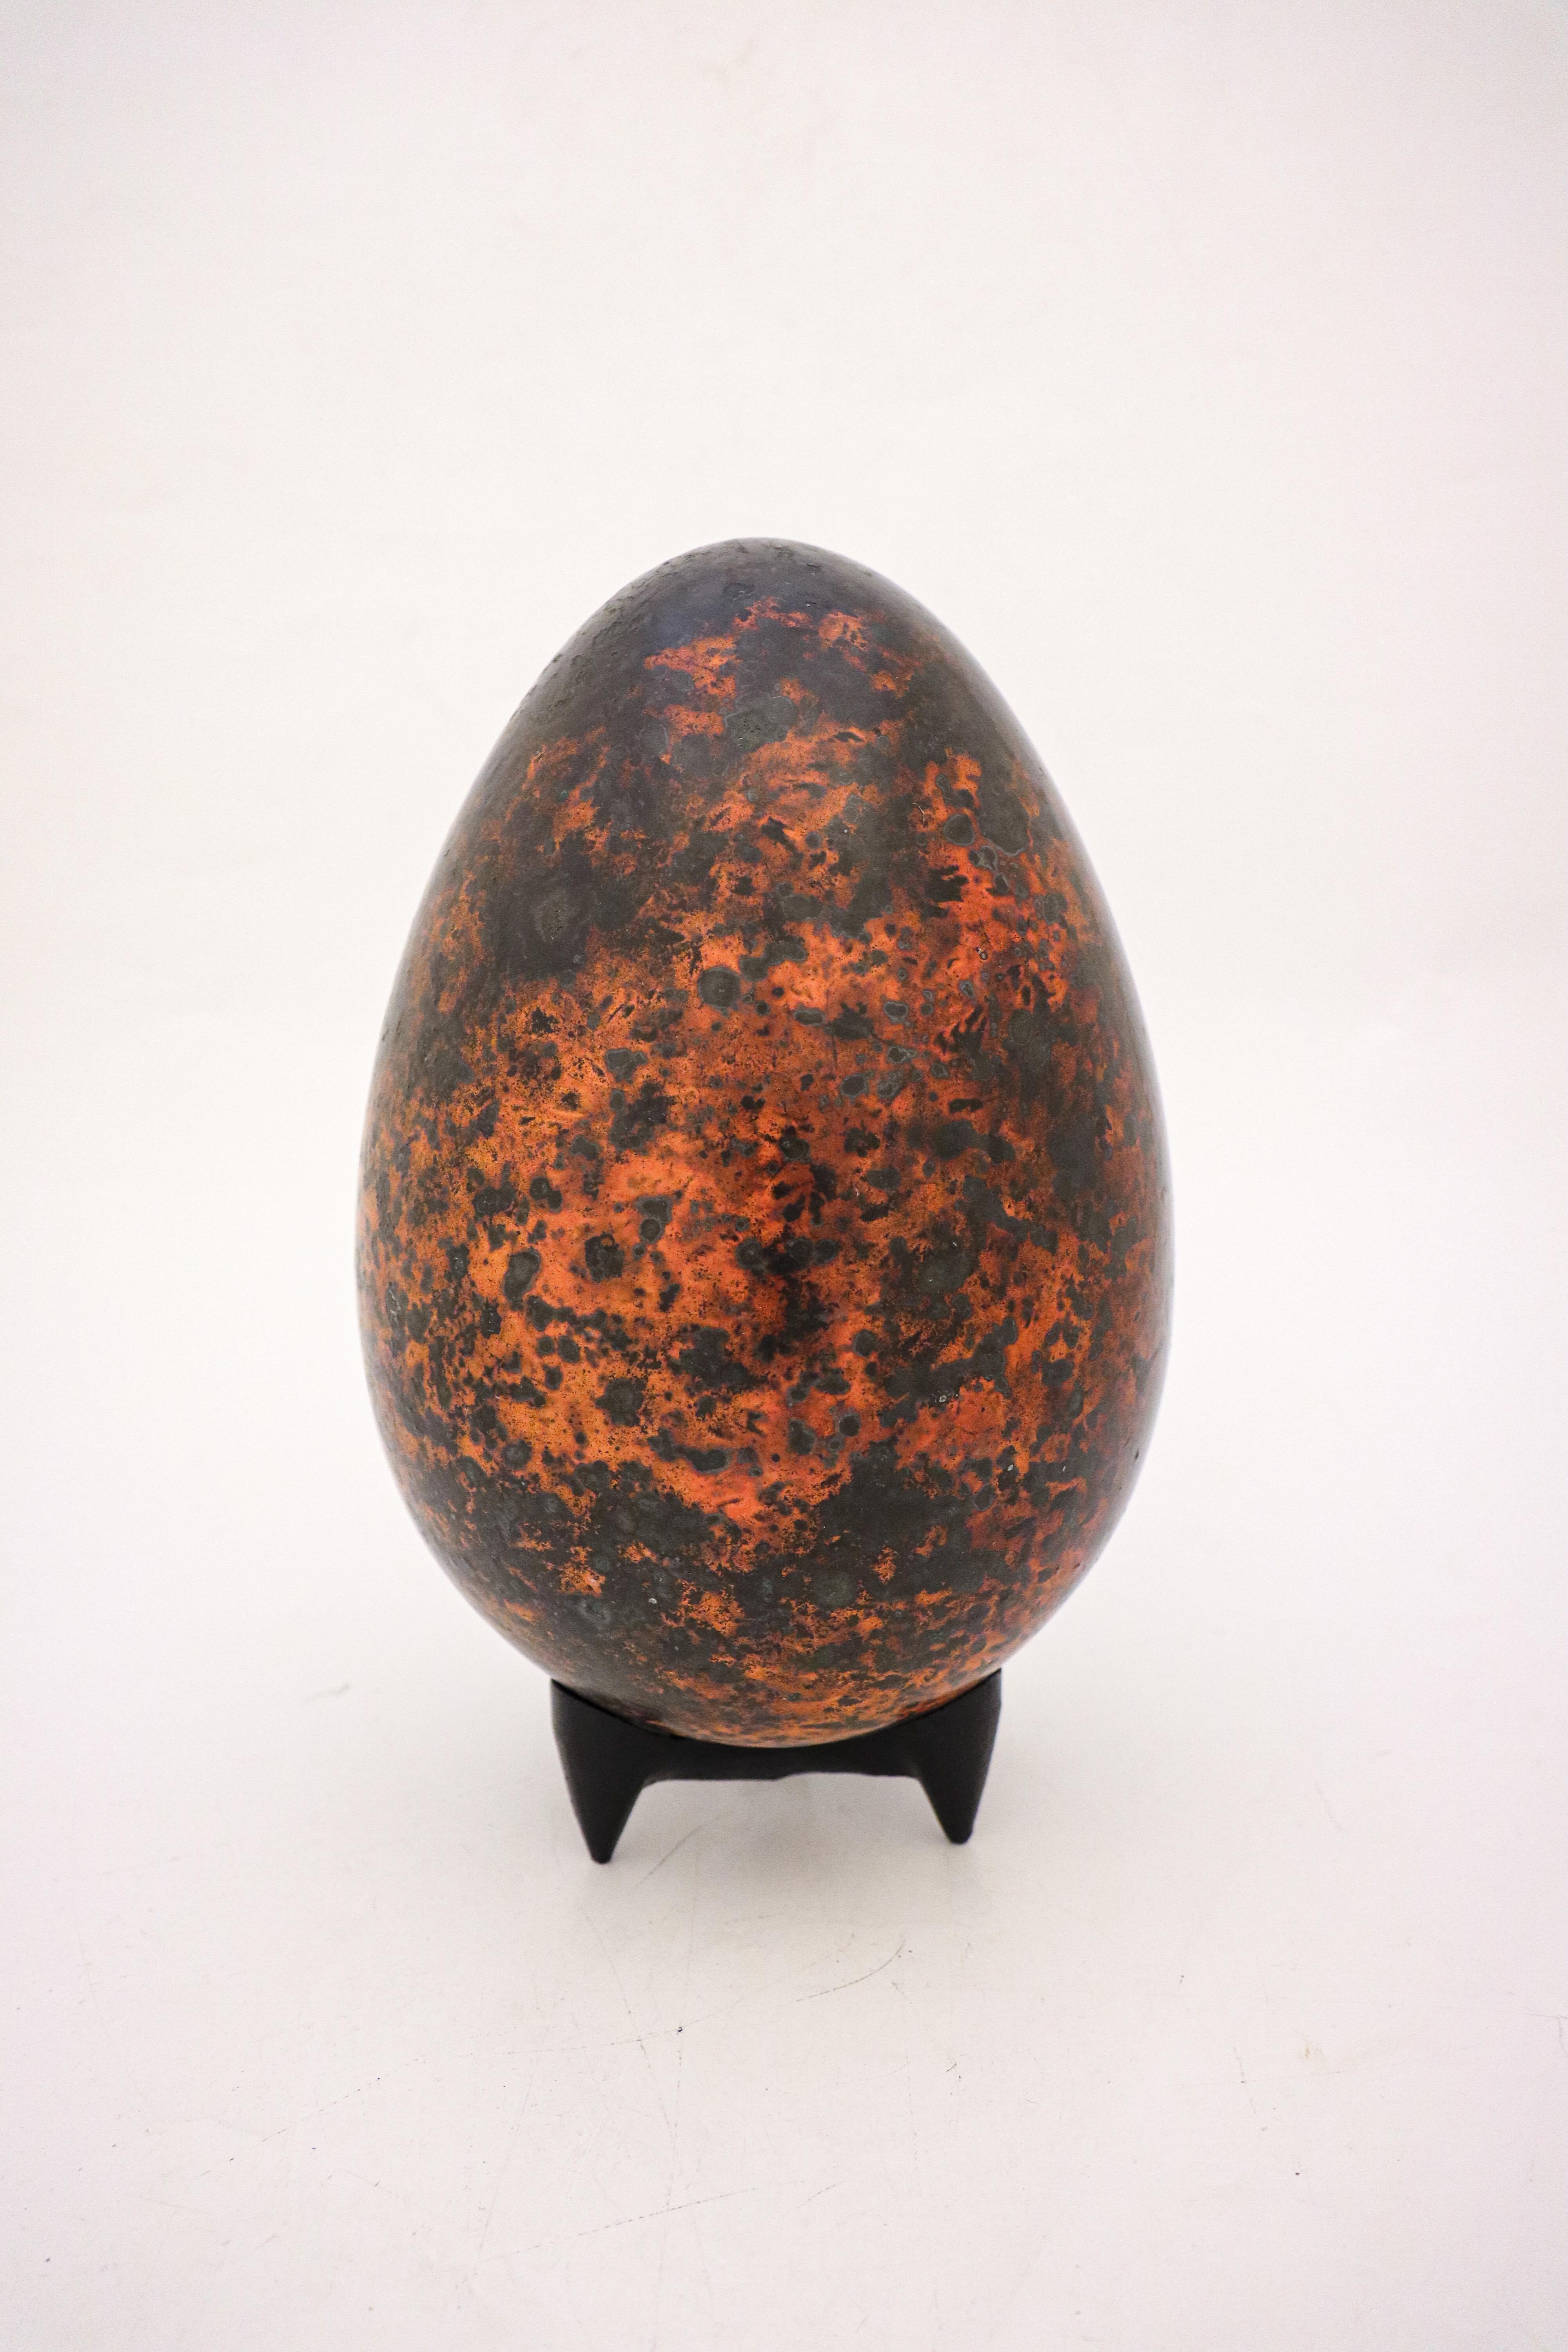 French Stoneware Sculpture Egg Orange & Black-Tone Glaze by Hans Hedberg, Biot, France